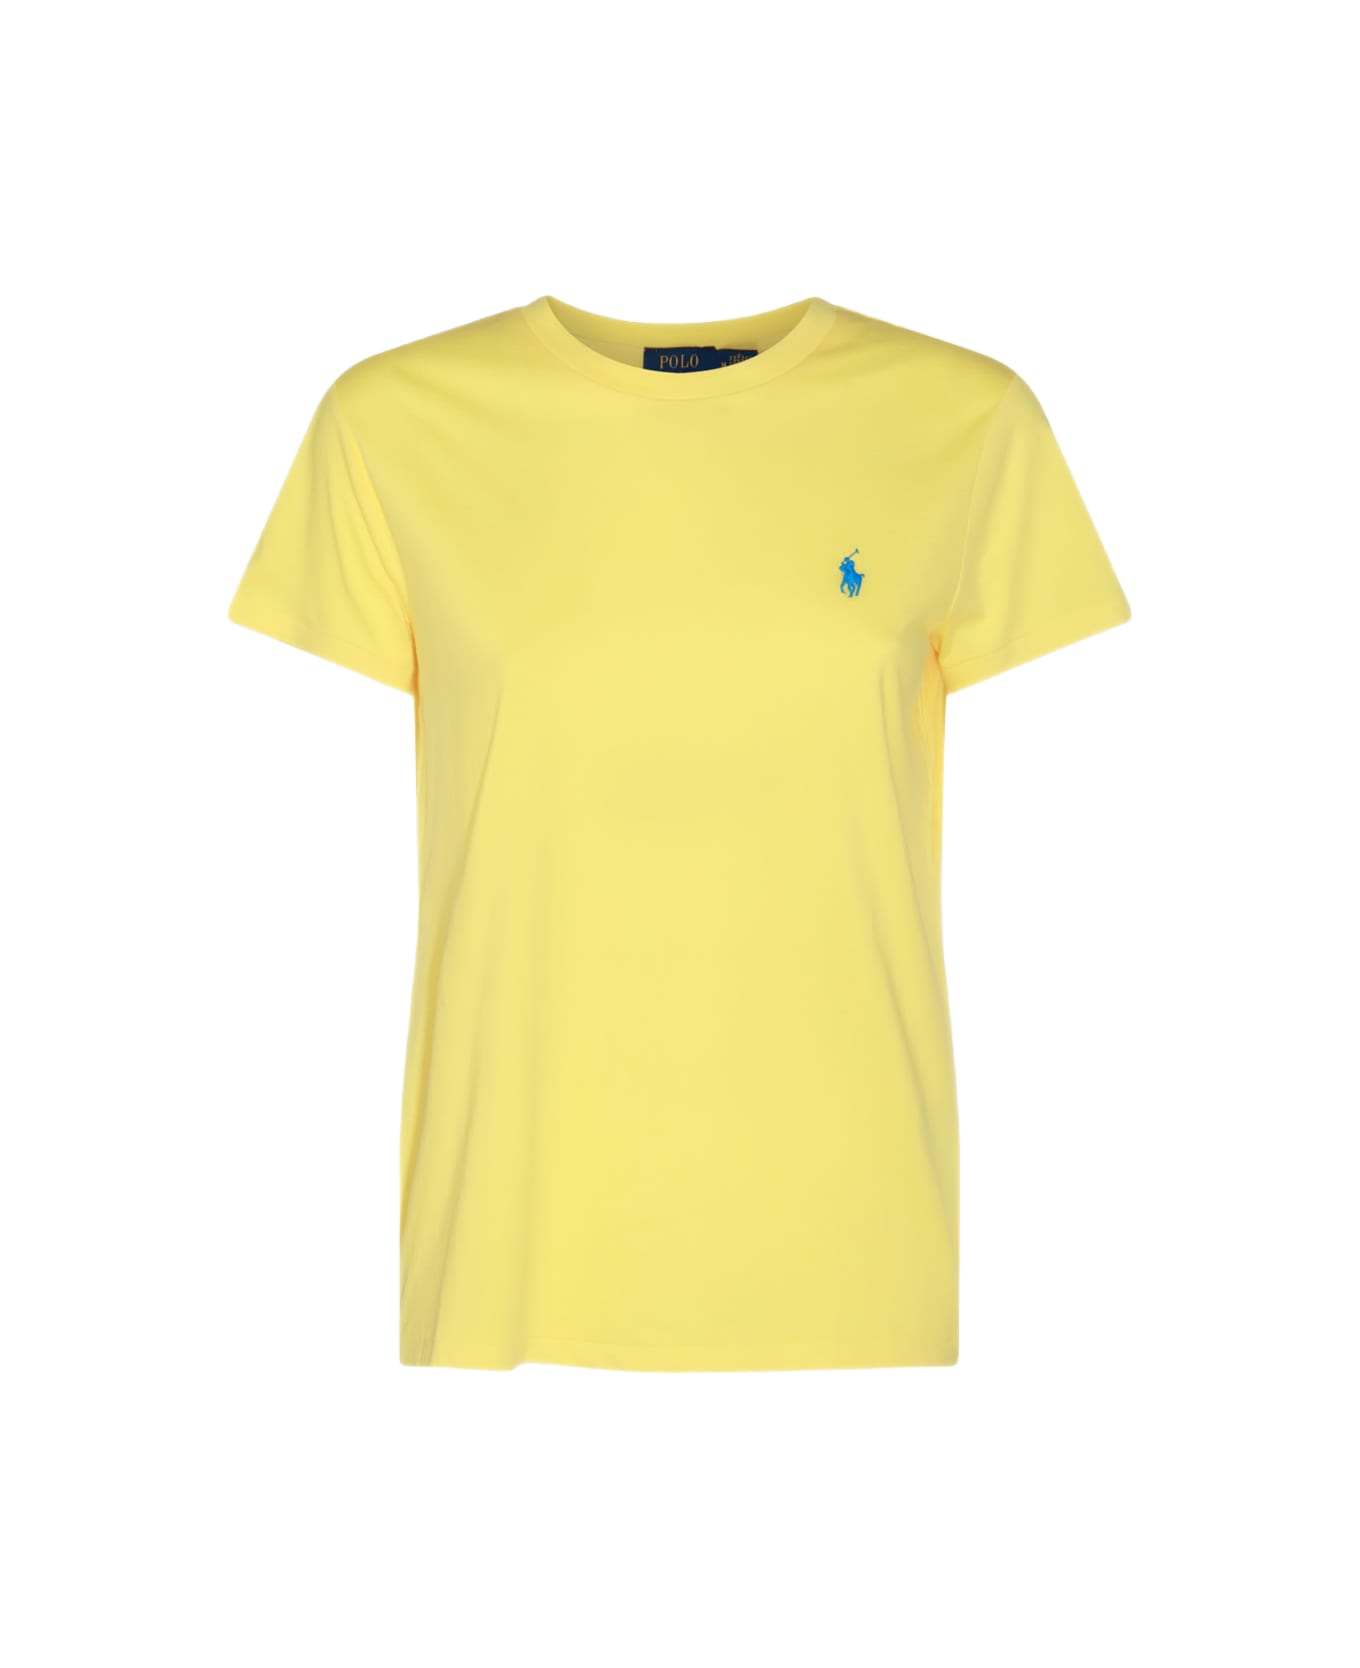 Polo Ralph Lauren Yellow And Blue Cotton T-shirt - COASTAL YELLOW